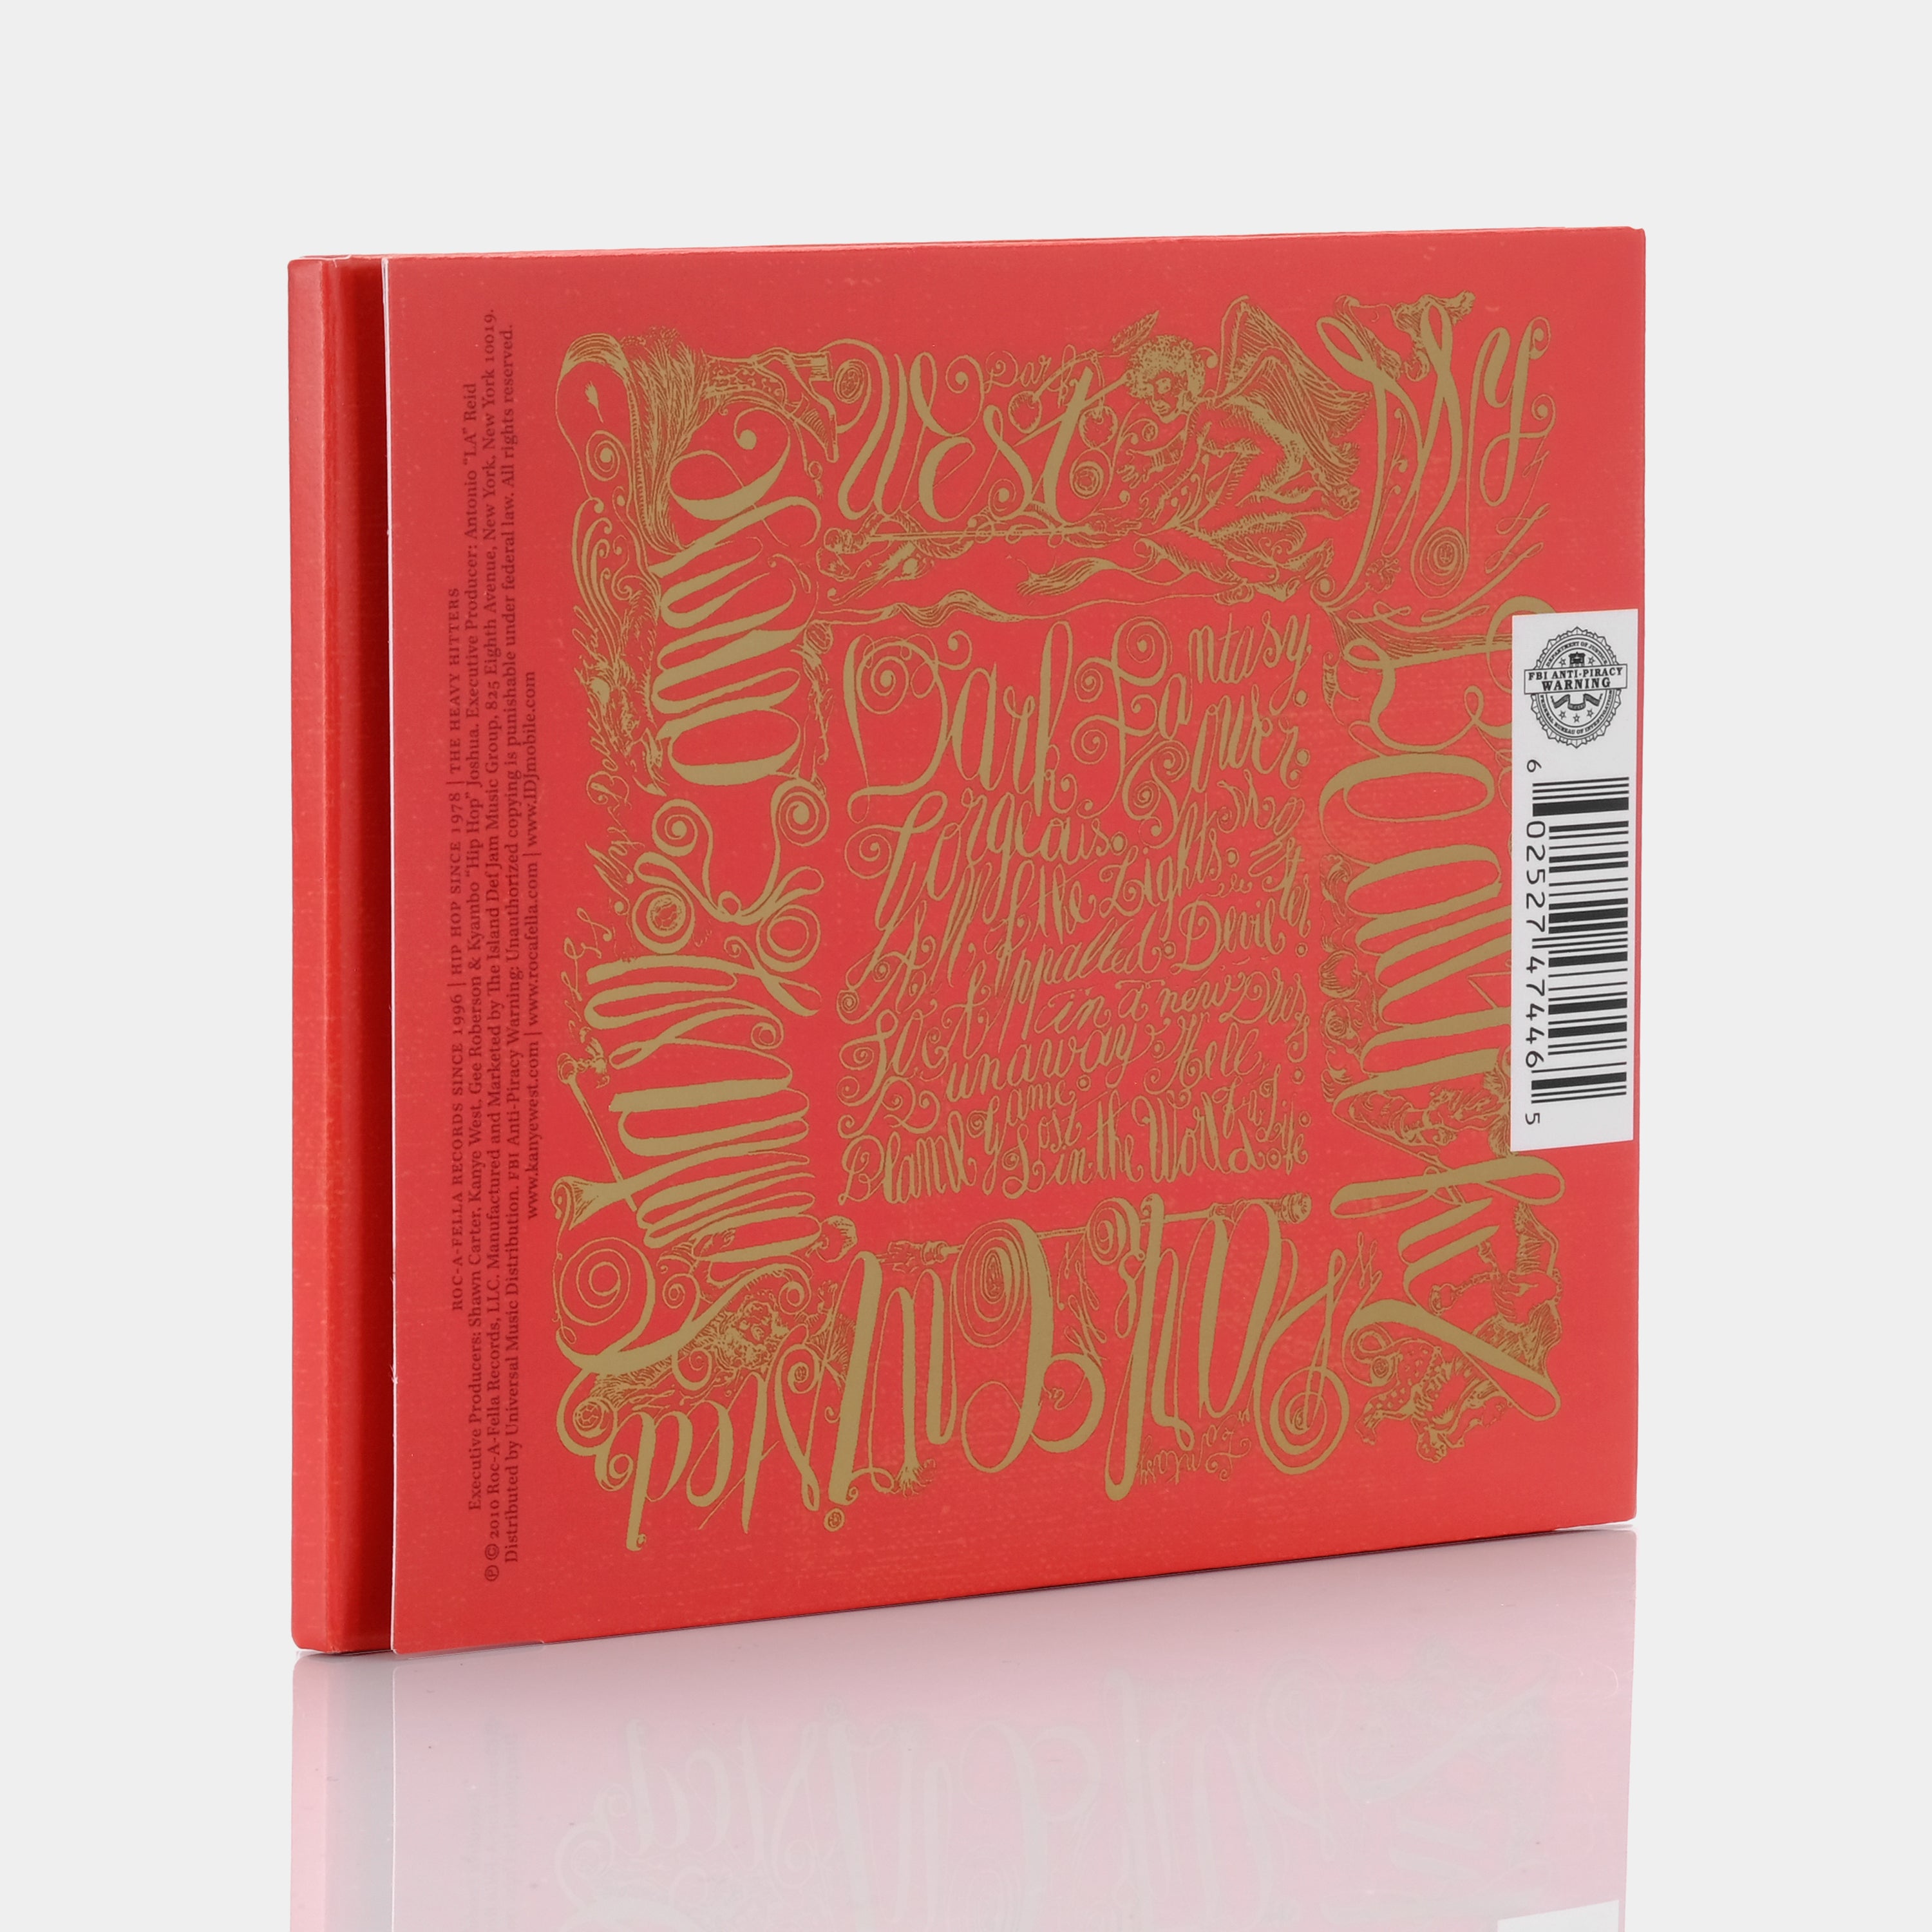 Kanye West - My Beautiful Dark Twisted Fantasy CD